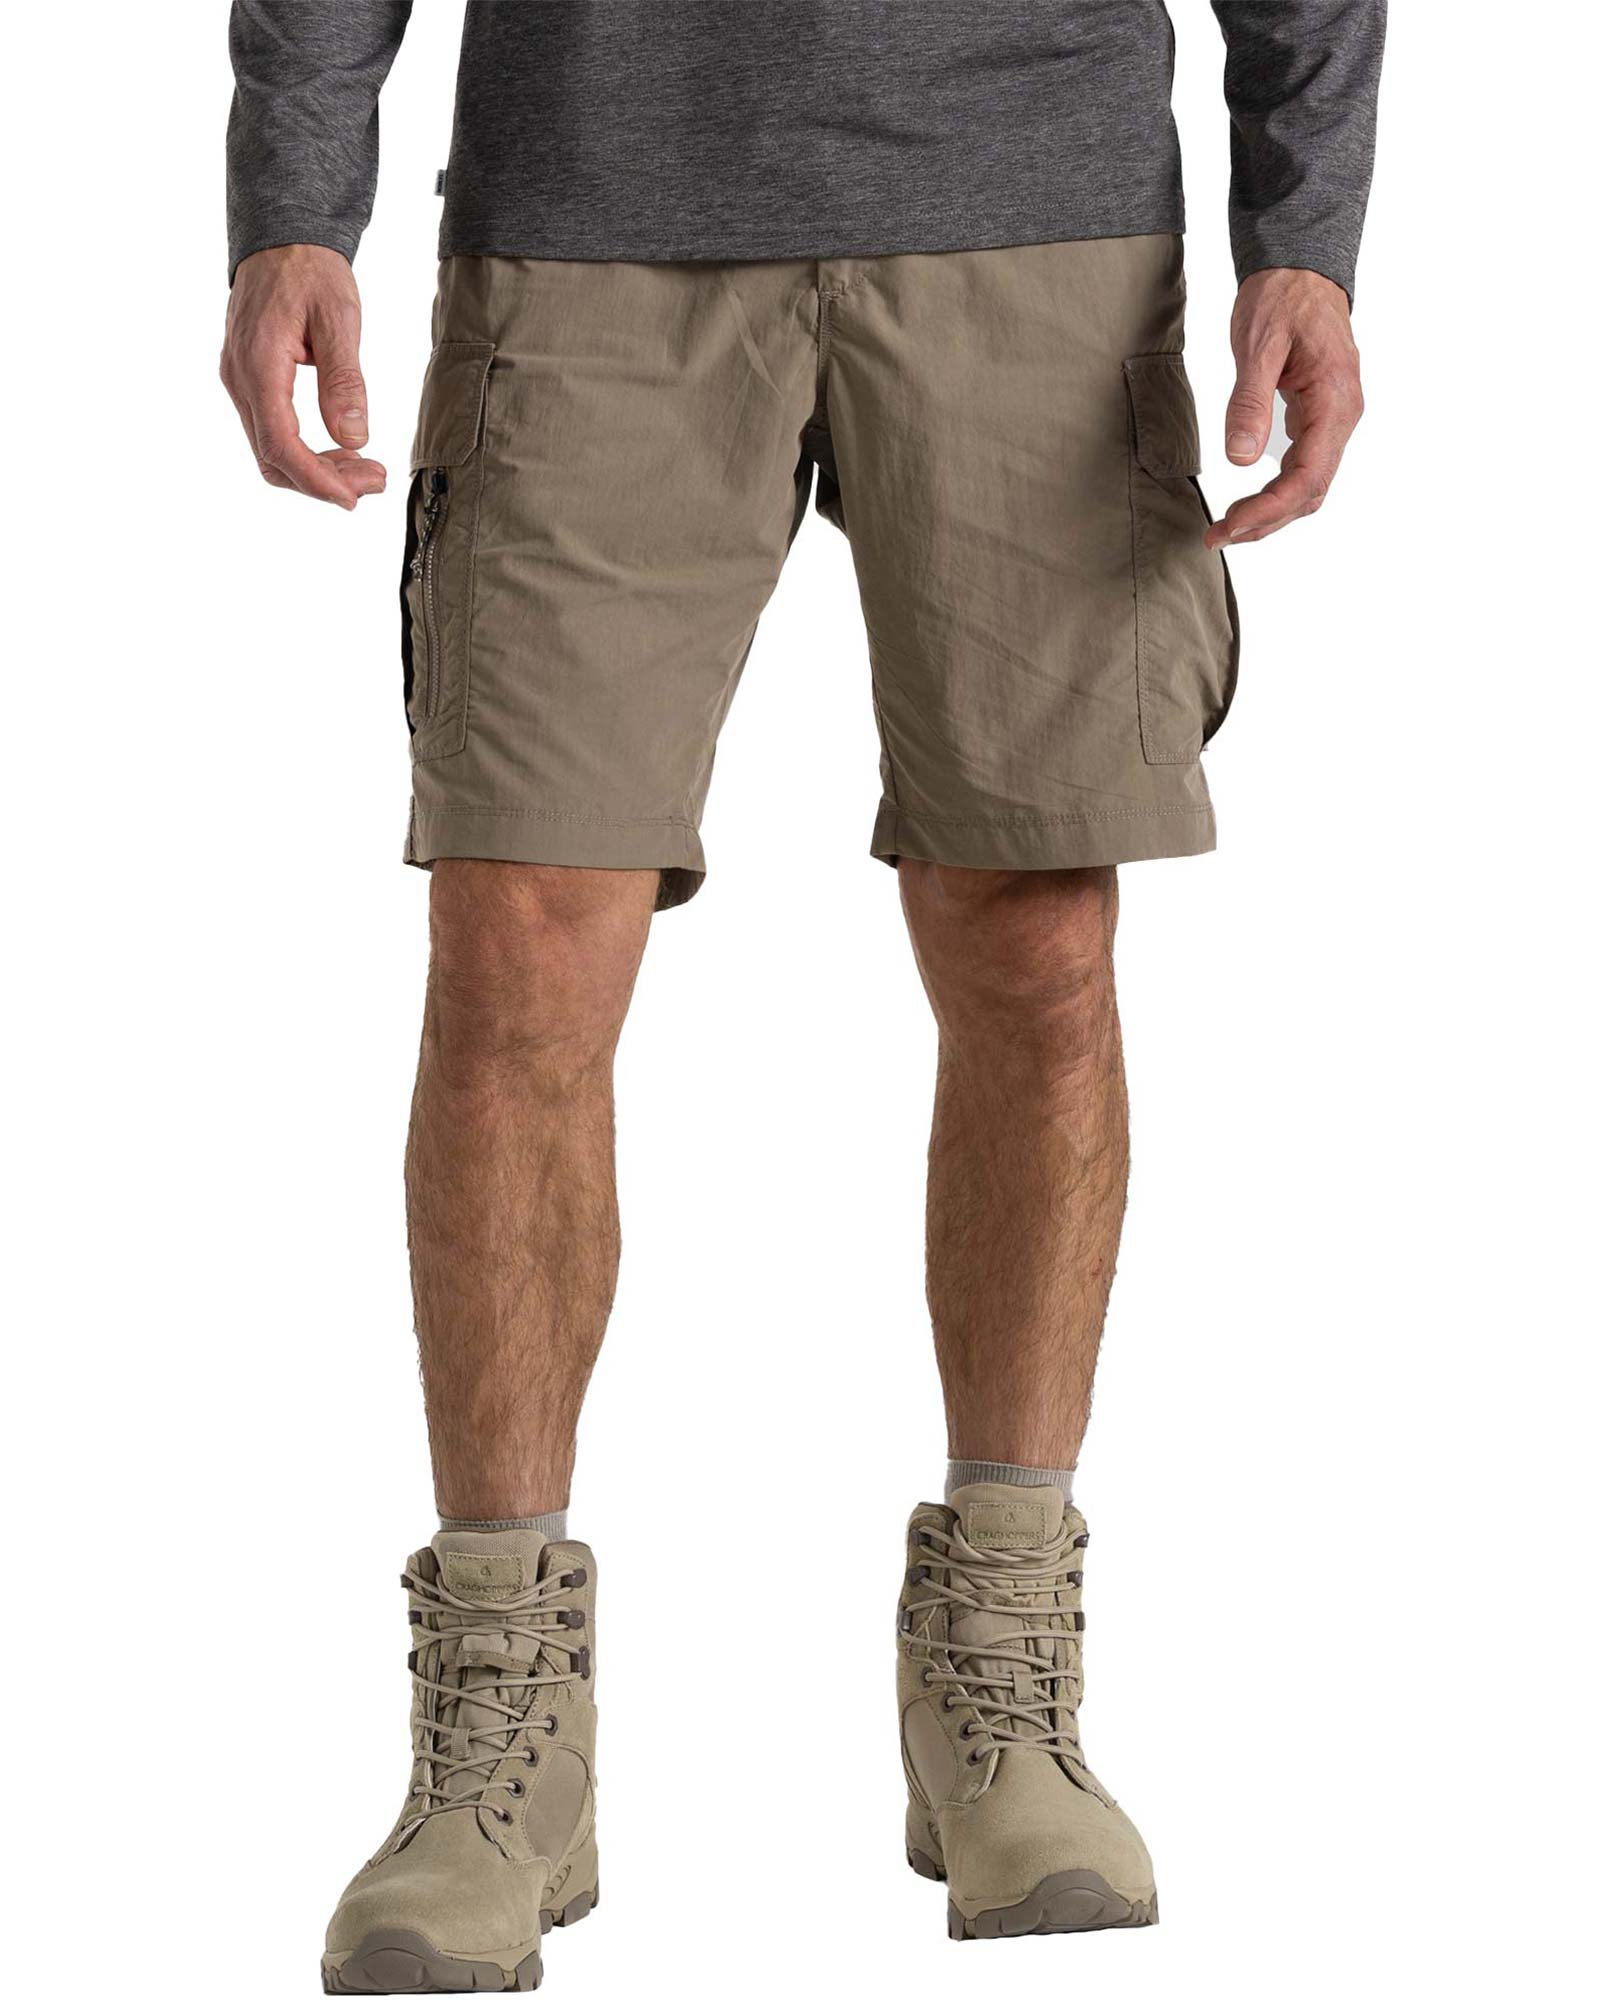 Craghoppers Men's Cargo Shorts